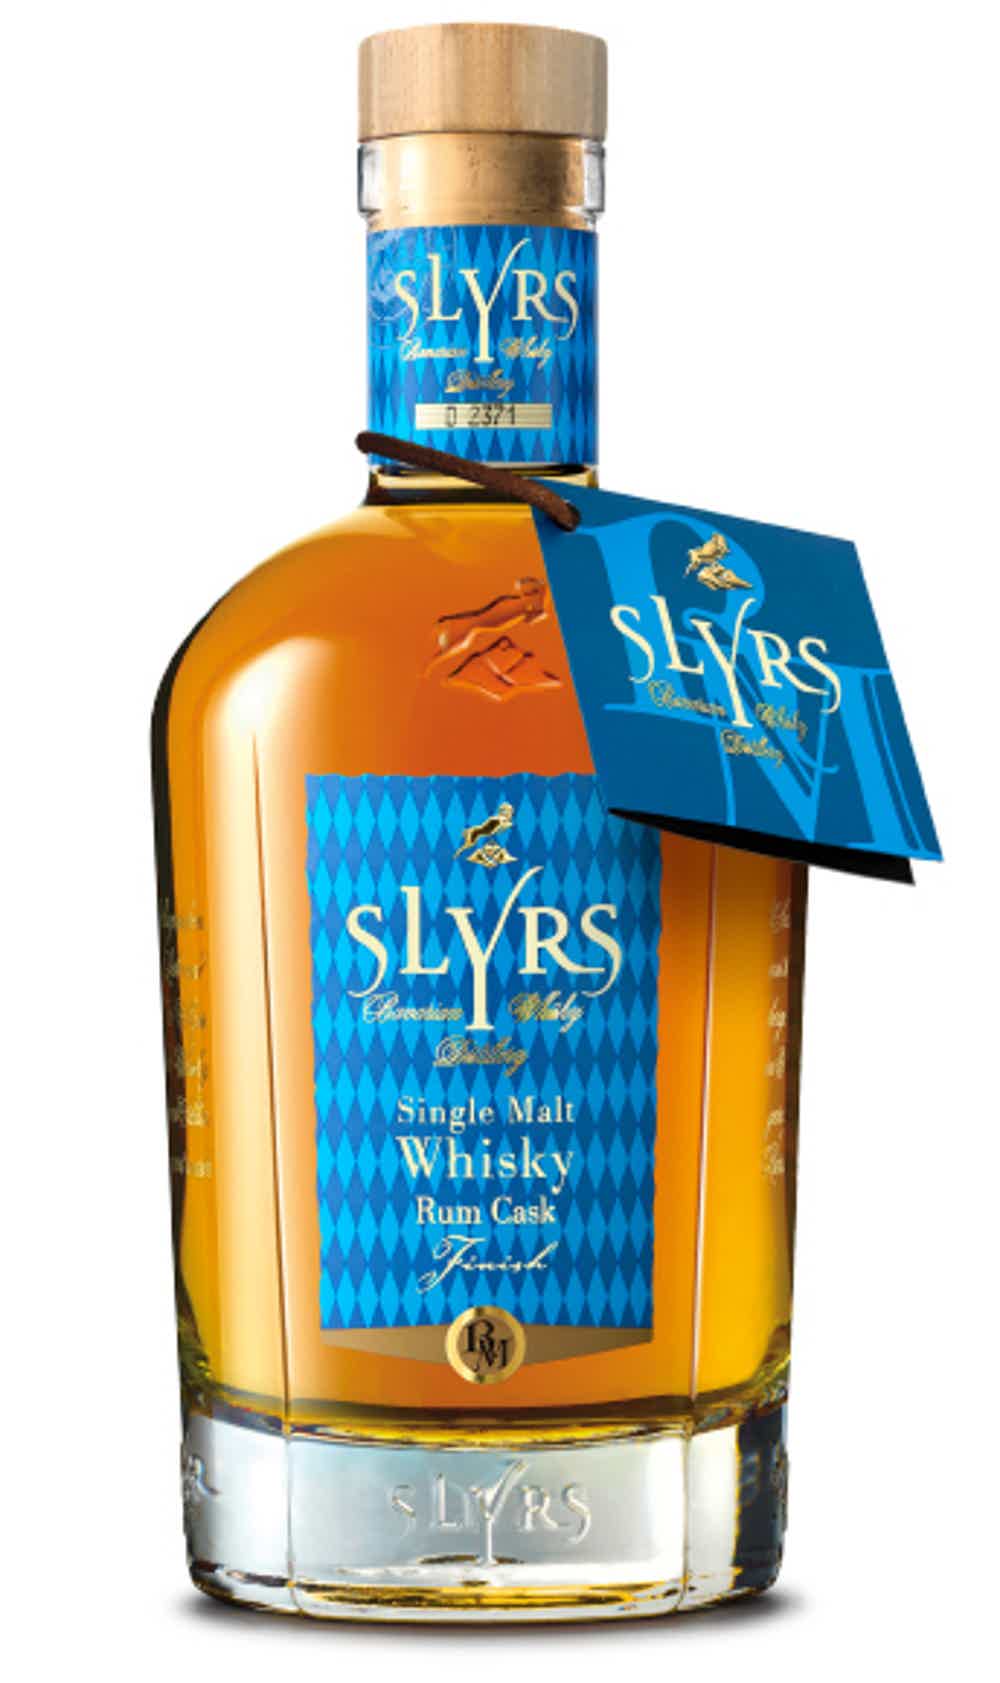 SLYRS Single Malt Whisky Rum Cask Finish 46% vol. 46.0% 0.35L, Spirits